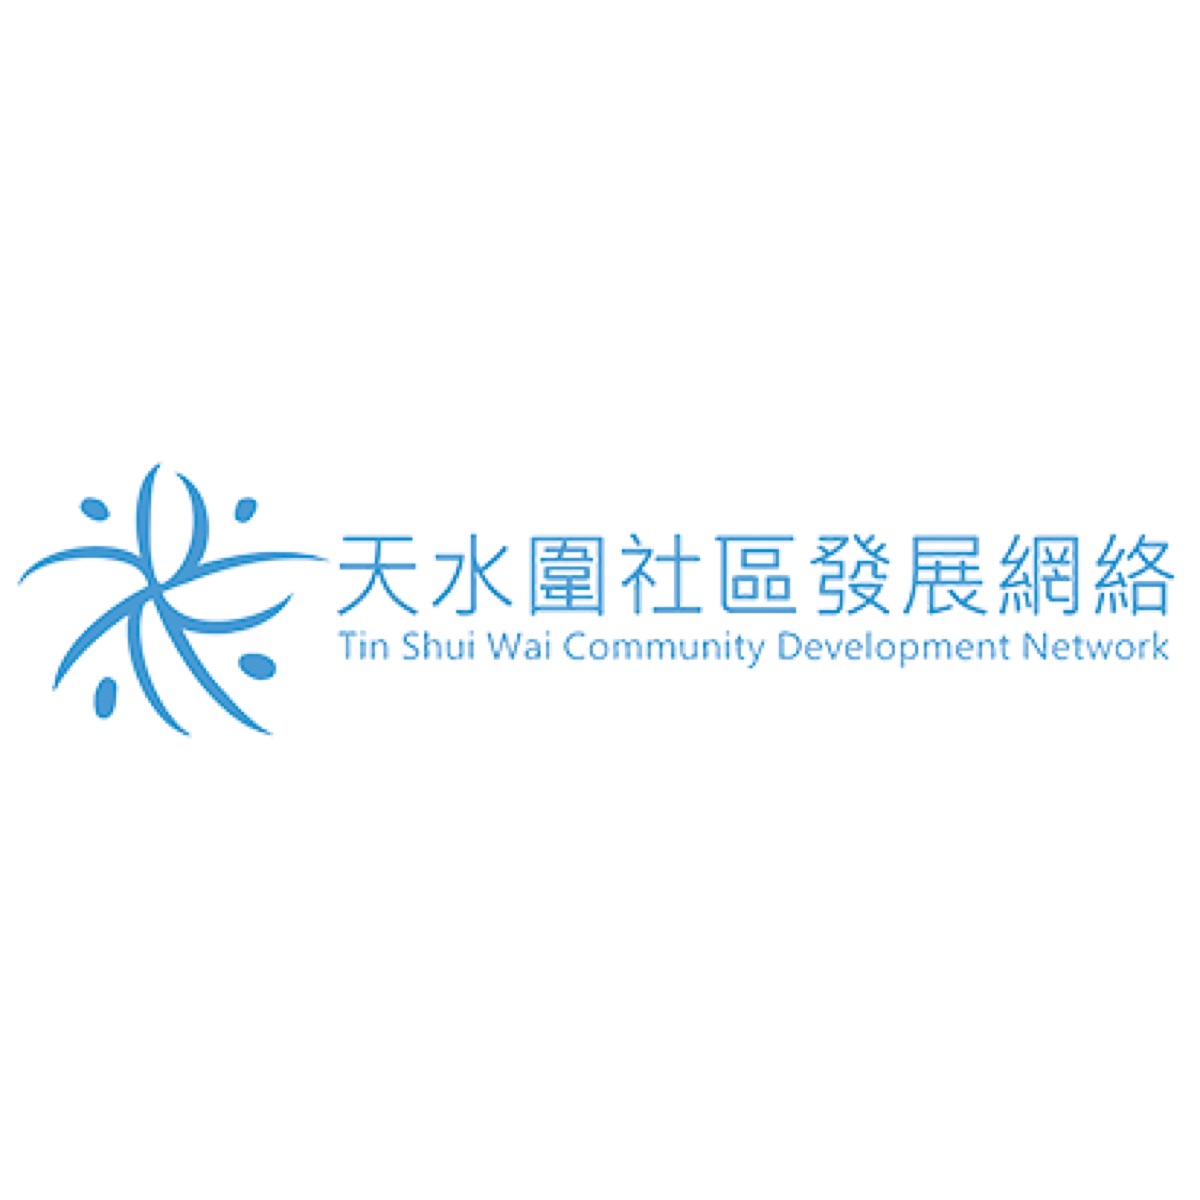 天水圍社區發展網絡 Tin Shui Wai Community Development Network